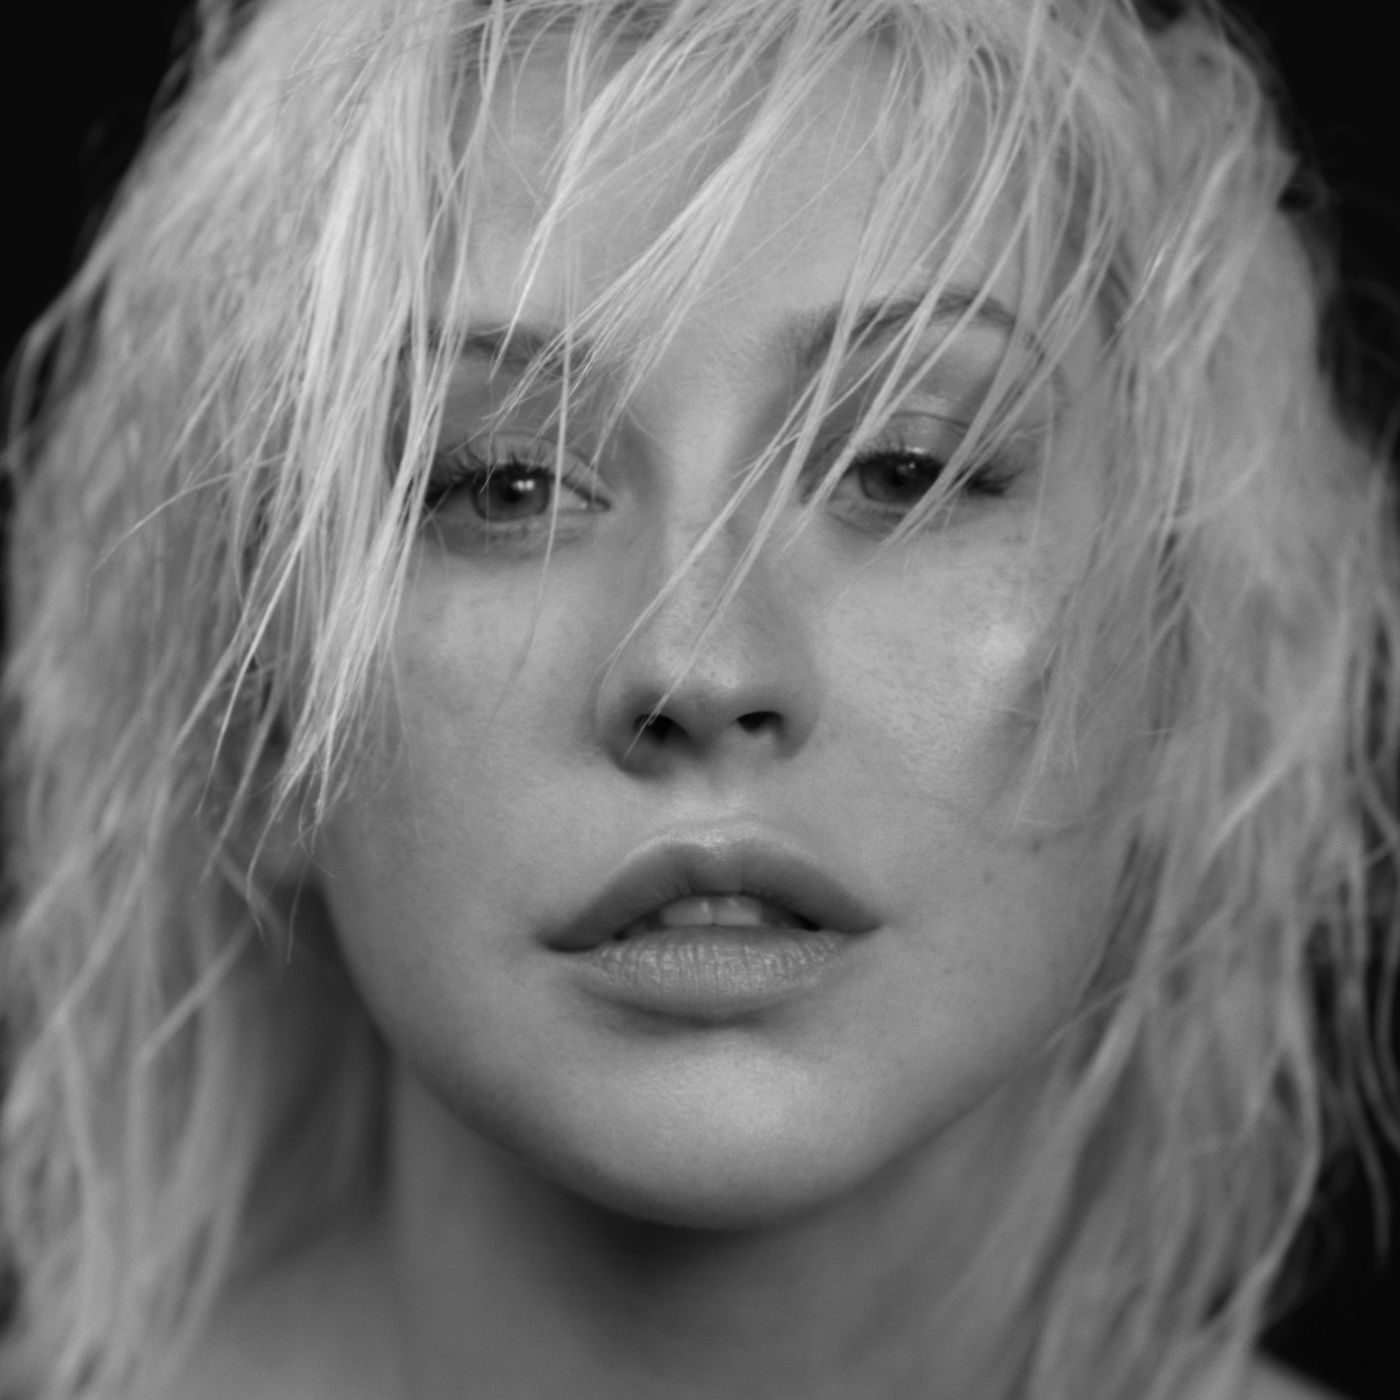 Christina Aguilera - Liberation (2018)